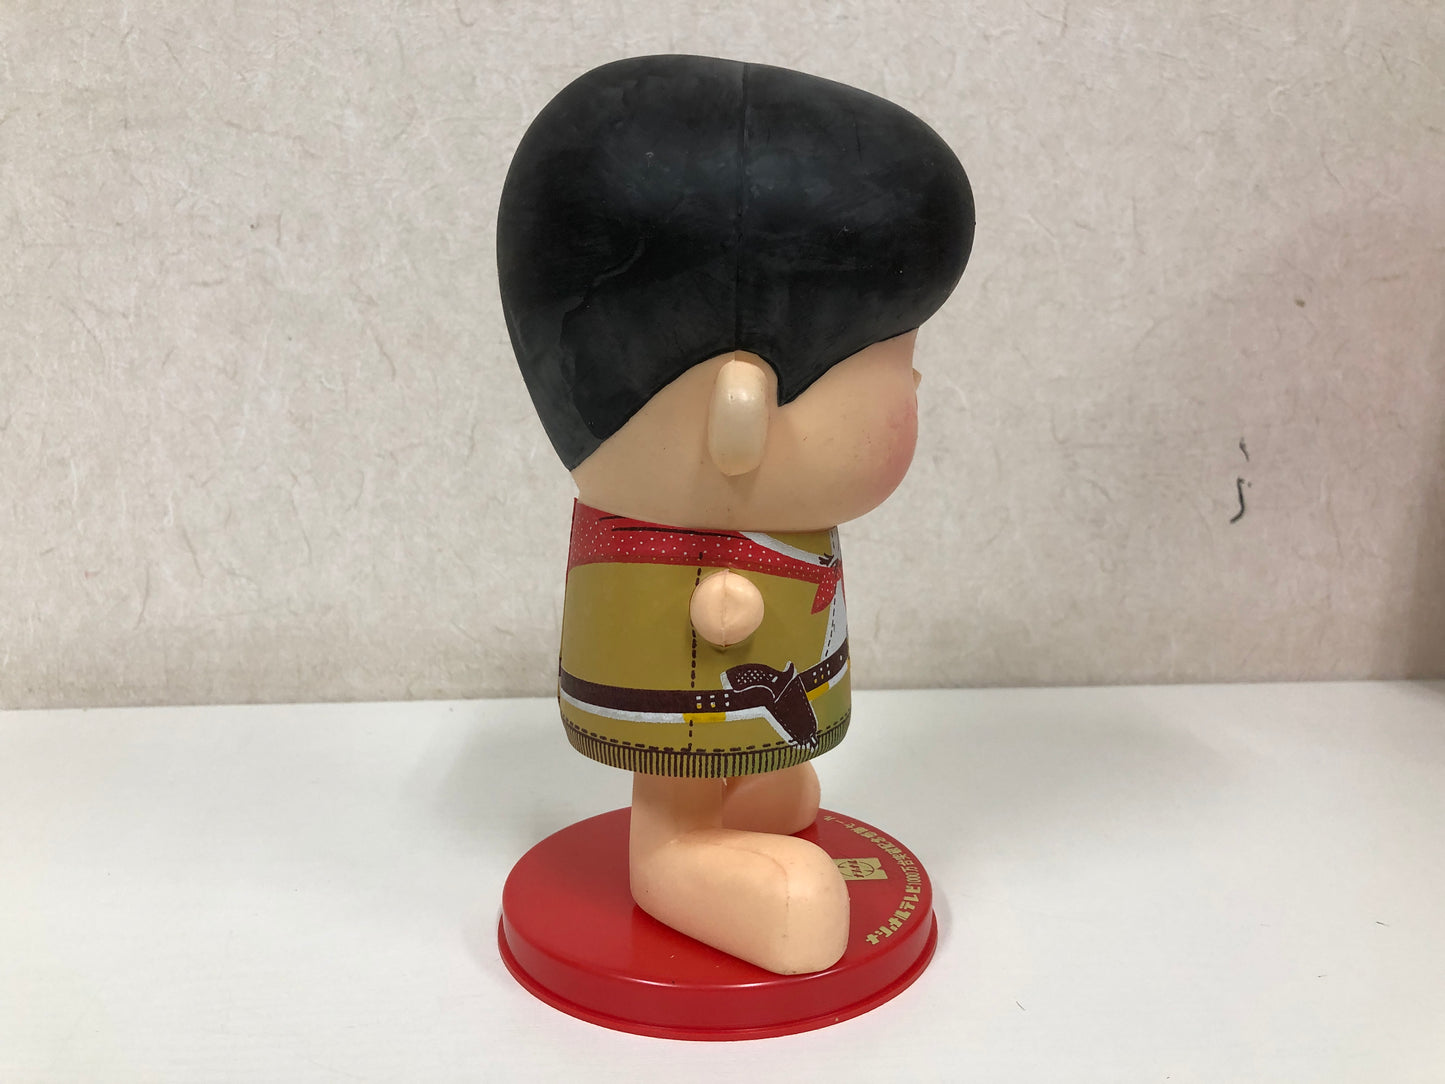 Y3997 NINGYO National Boy doll box Showa retro Japan vintage figure antique